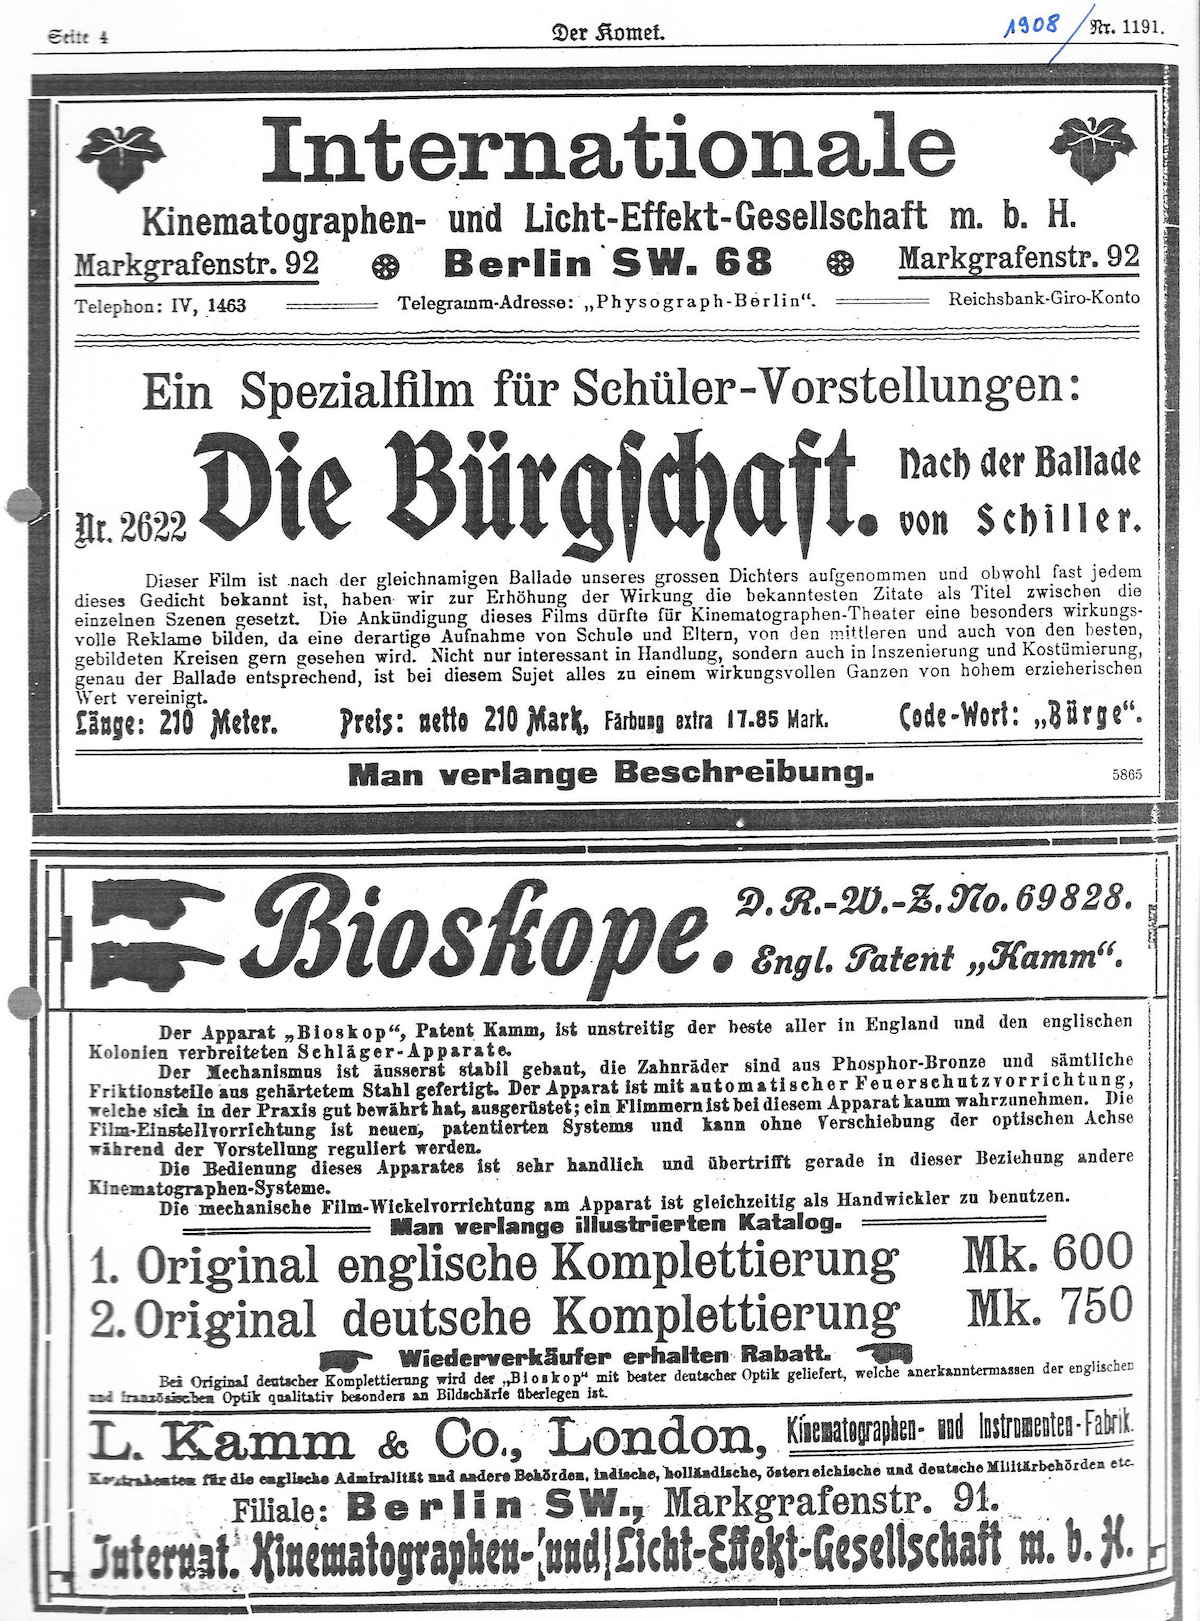 Schaefer Kinder und Jugendfilme Weimarer Republik abb1 Der Komet 1191 1908 Kopie